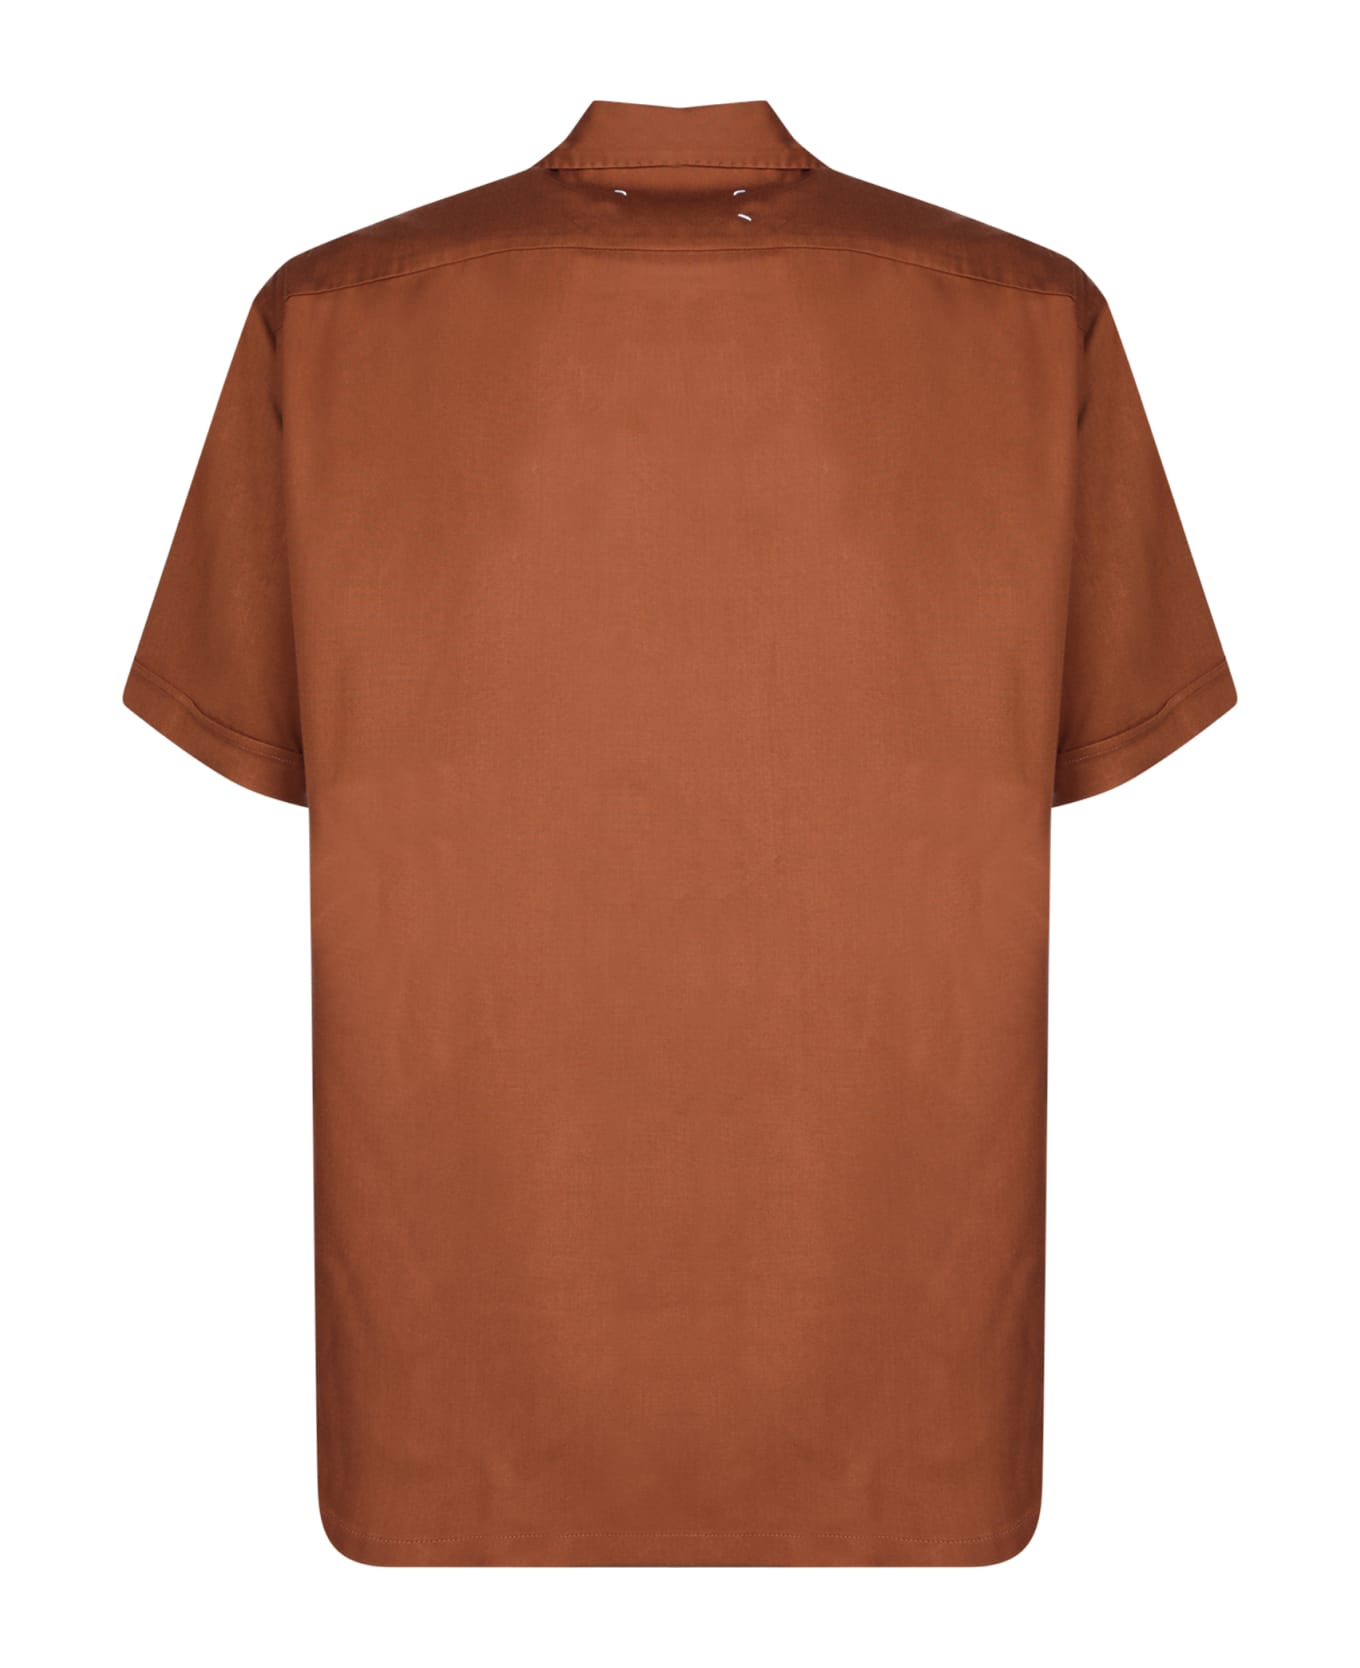 Maison Margiela Short Sleeves Brown Shirt - Orange